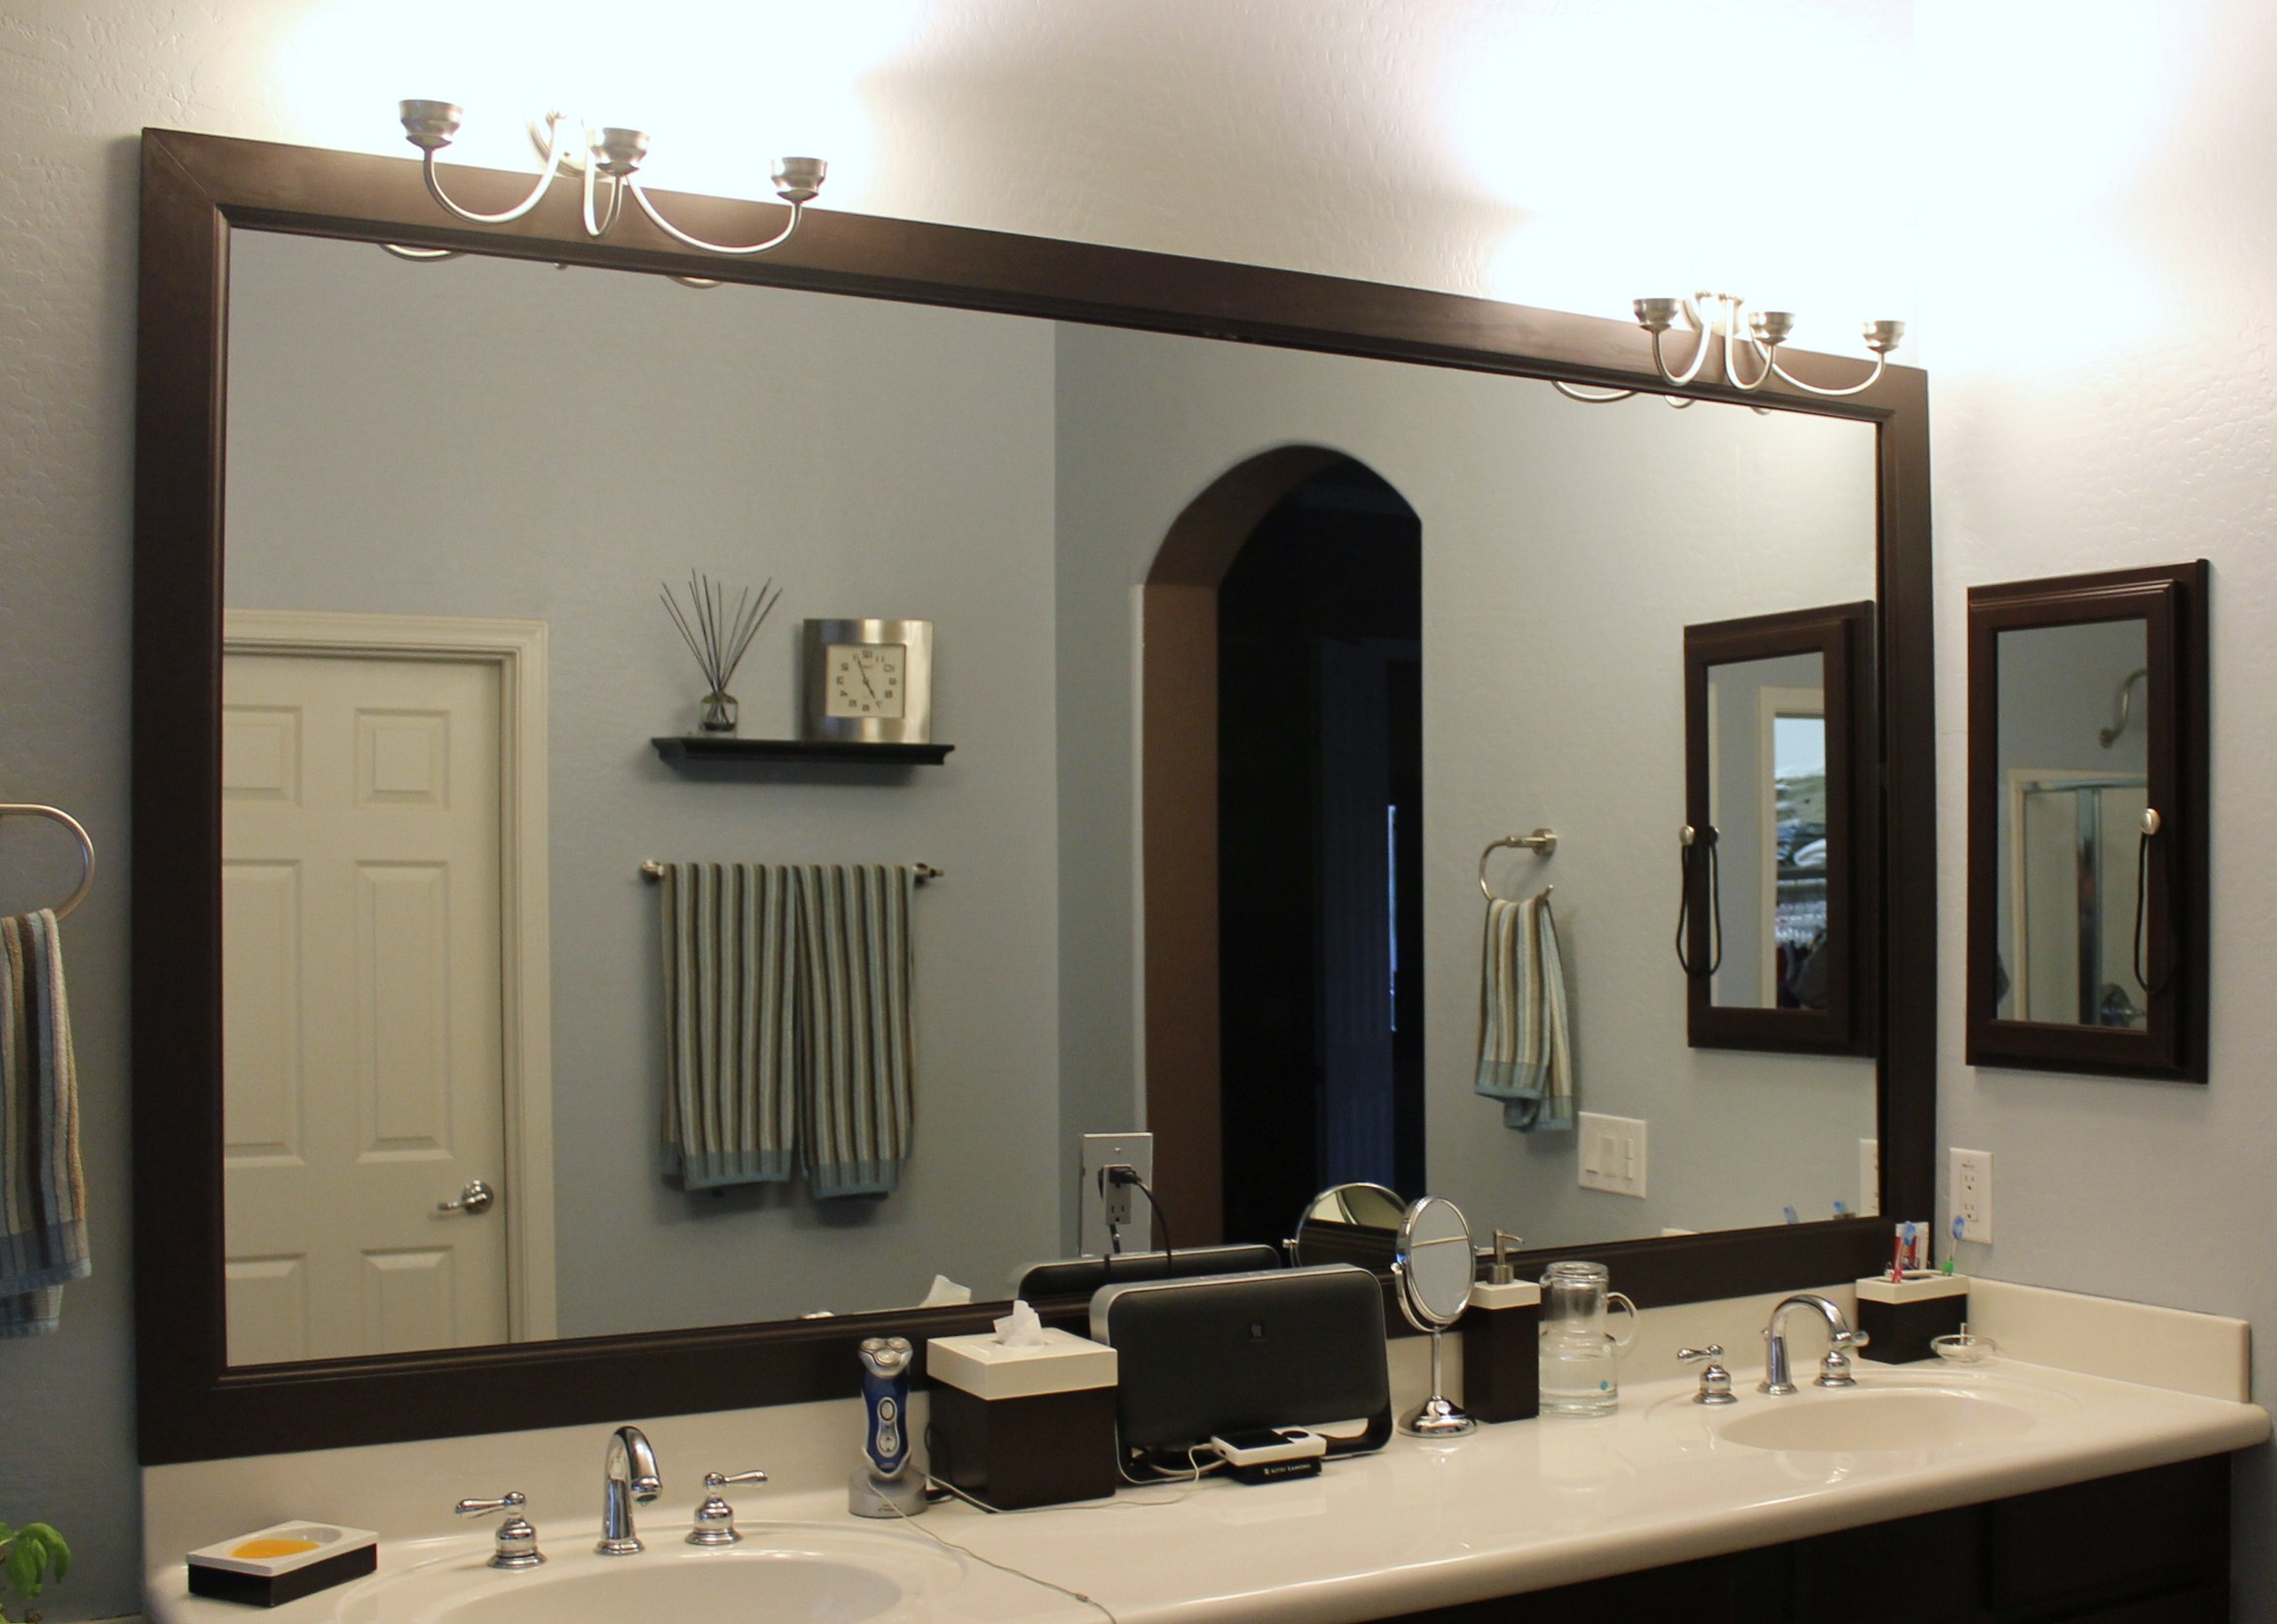 Large Framed Bathroom Mirrors
 Bathroom Enchanting Framed Bathroom Mirrors